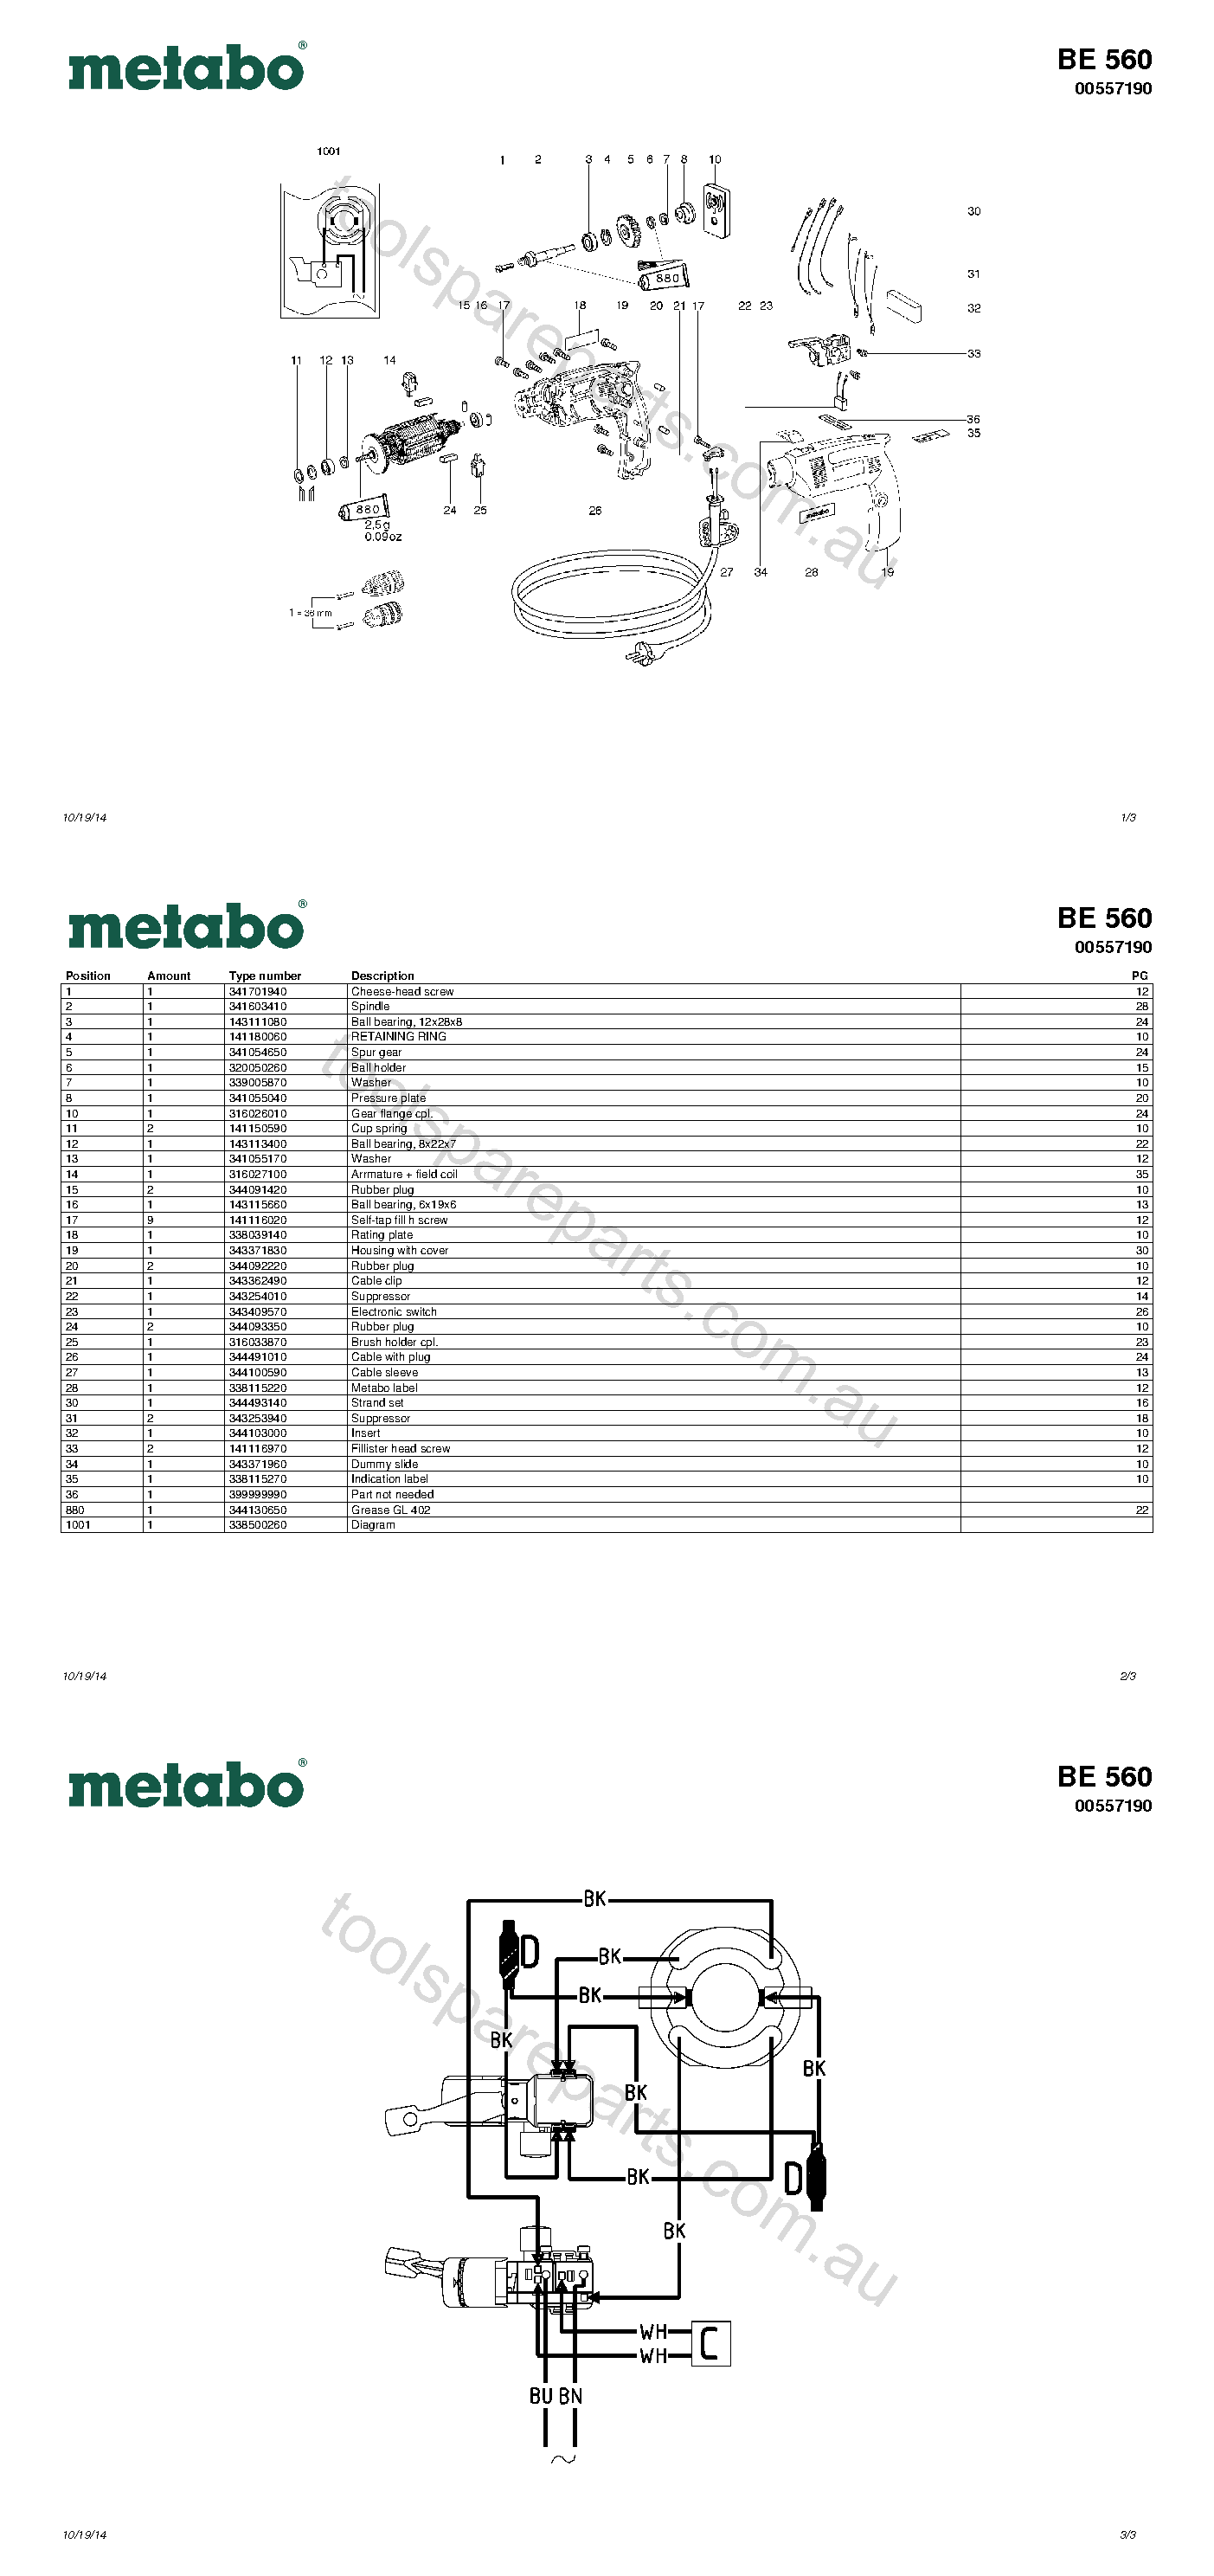 Metabo BE 560 00557190  Diagram 1